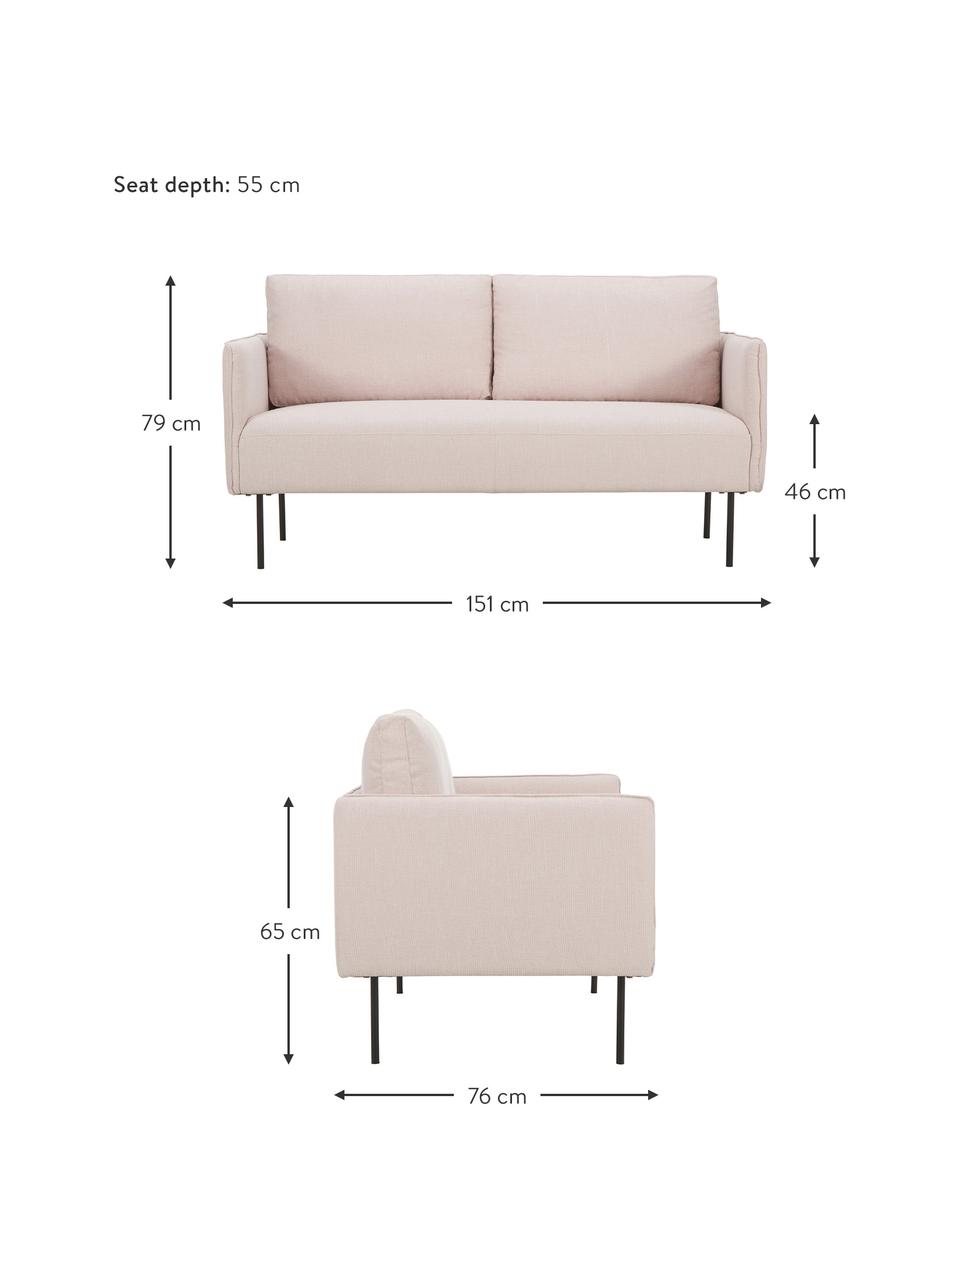 Sofa Ramira (2-Sitzer) in Rosa mit Metall-Füßen, Bezug: Polyester 40.000 Scheuert, Gestell: Massives Kiefernholz, Spe, Füße: Metall, pulverbeschichtet, Webstoff Rosa, 151 x 79 cm